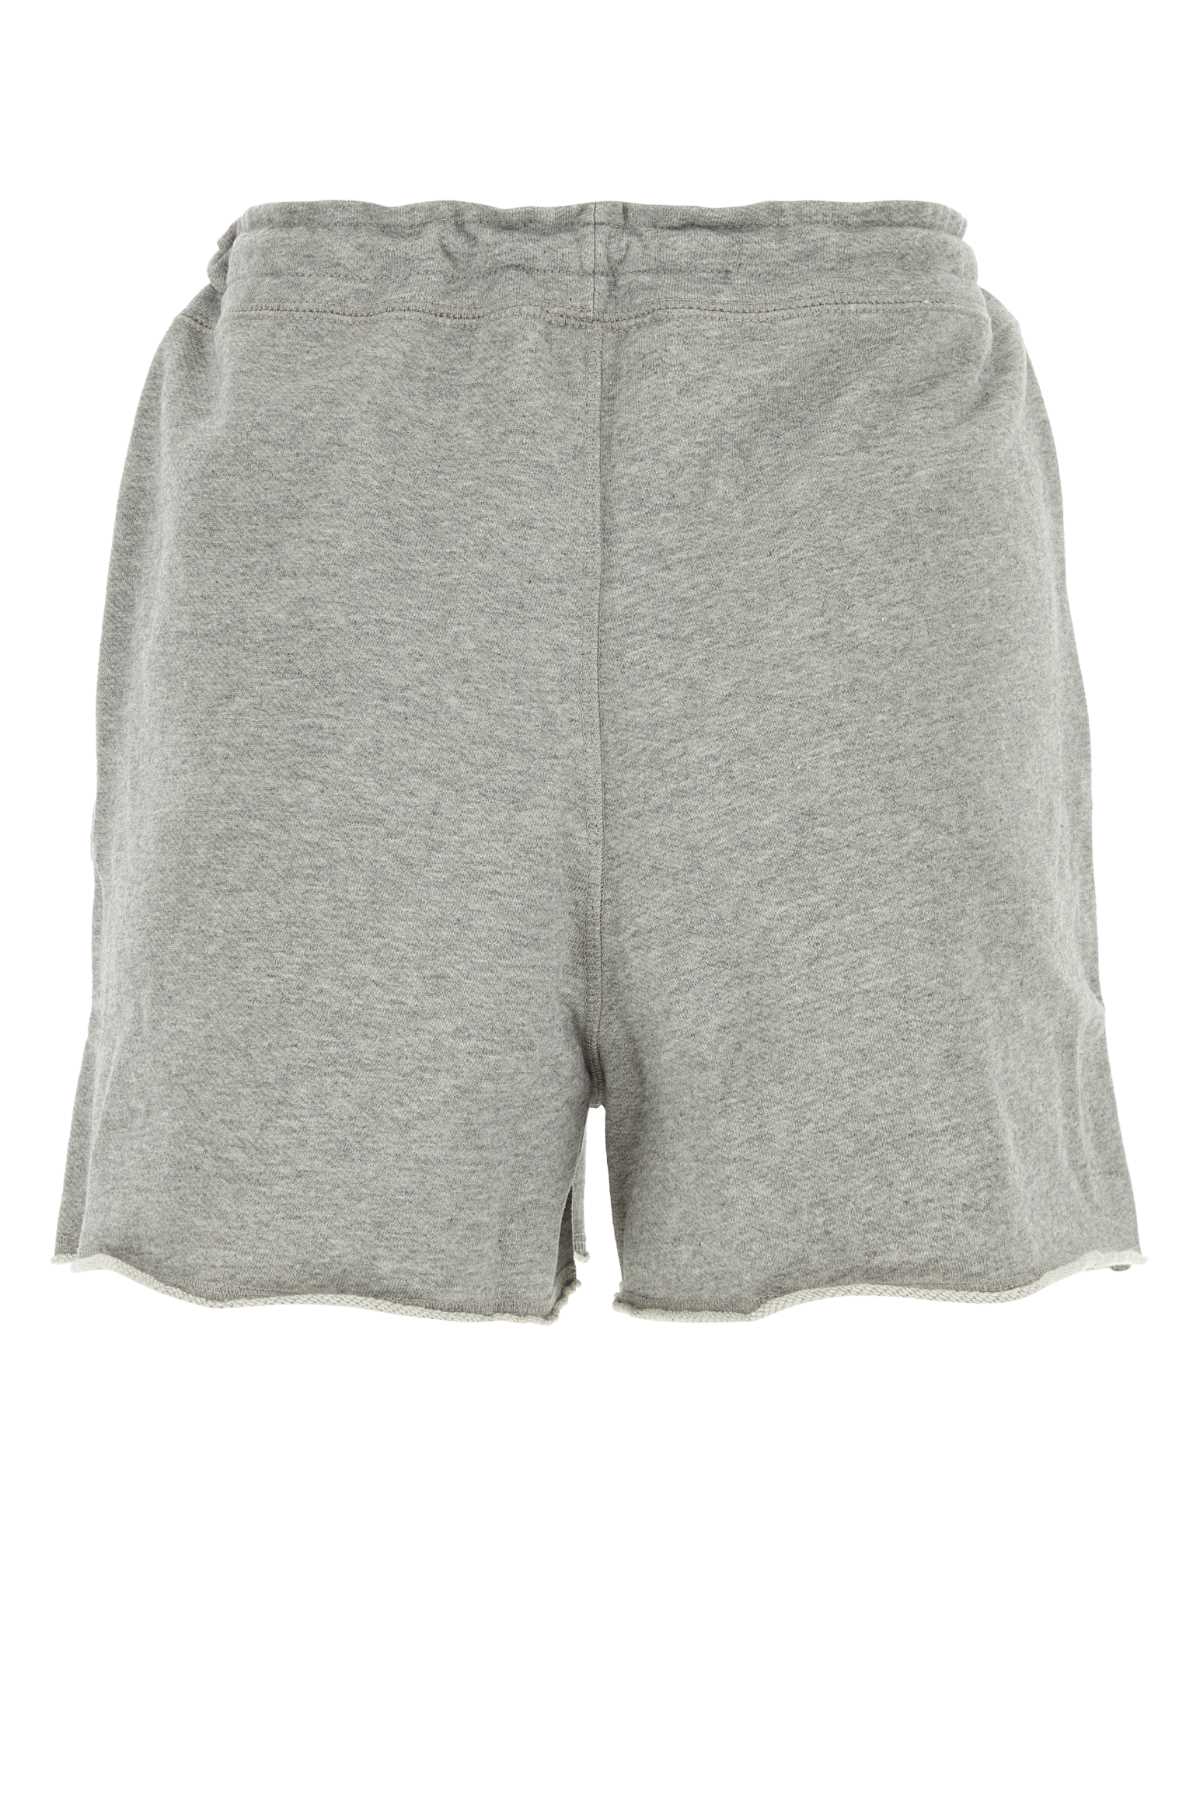 Ganni Grey Cotton Shorts In Palomamelange